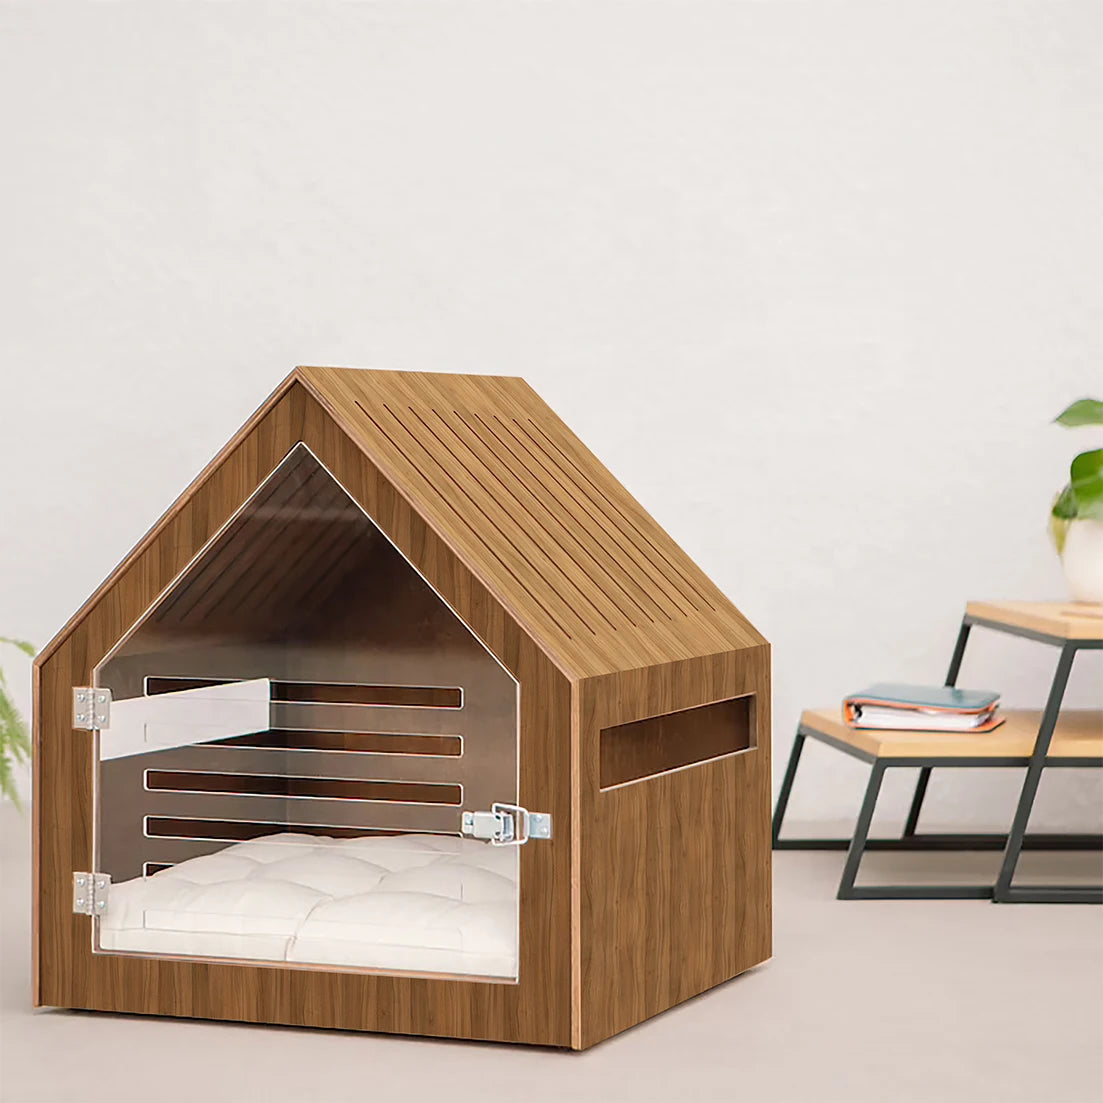 Modern Wooden Cat/Dog House (Brown)